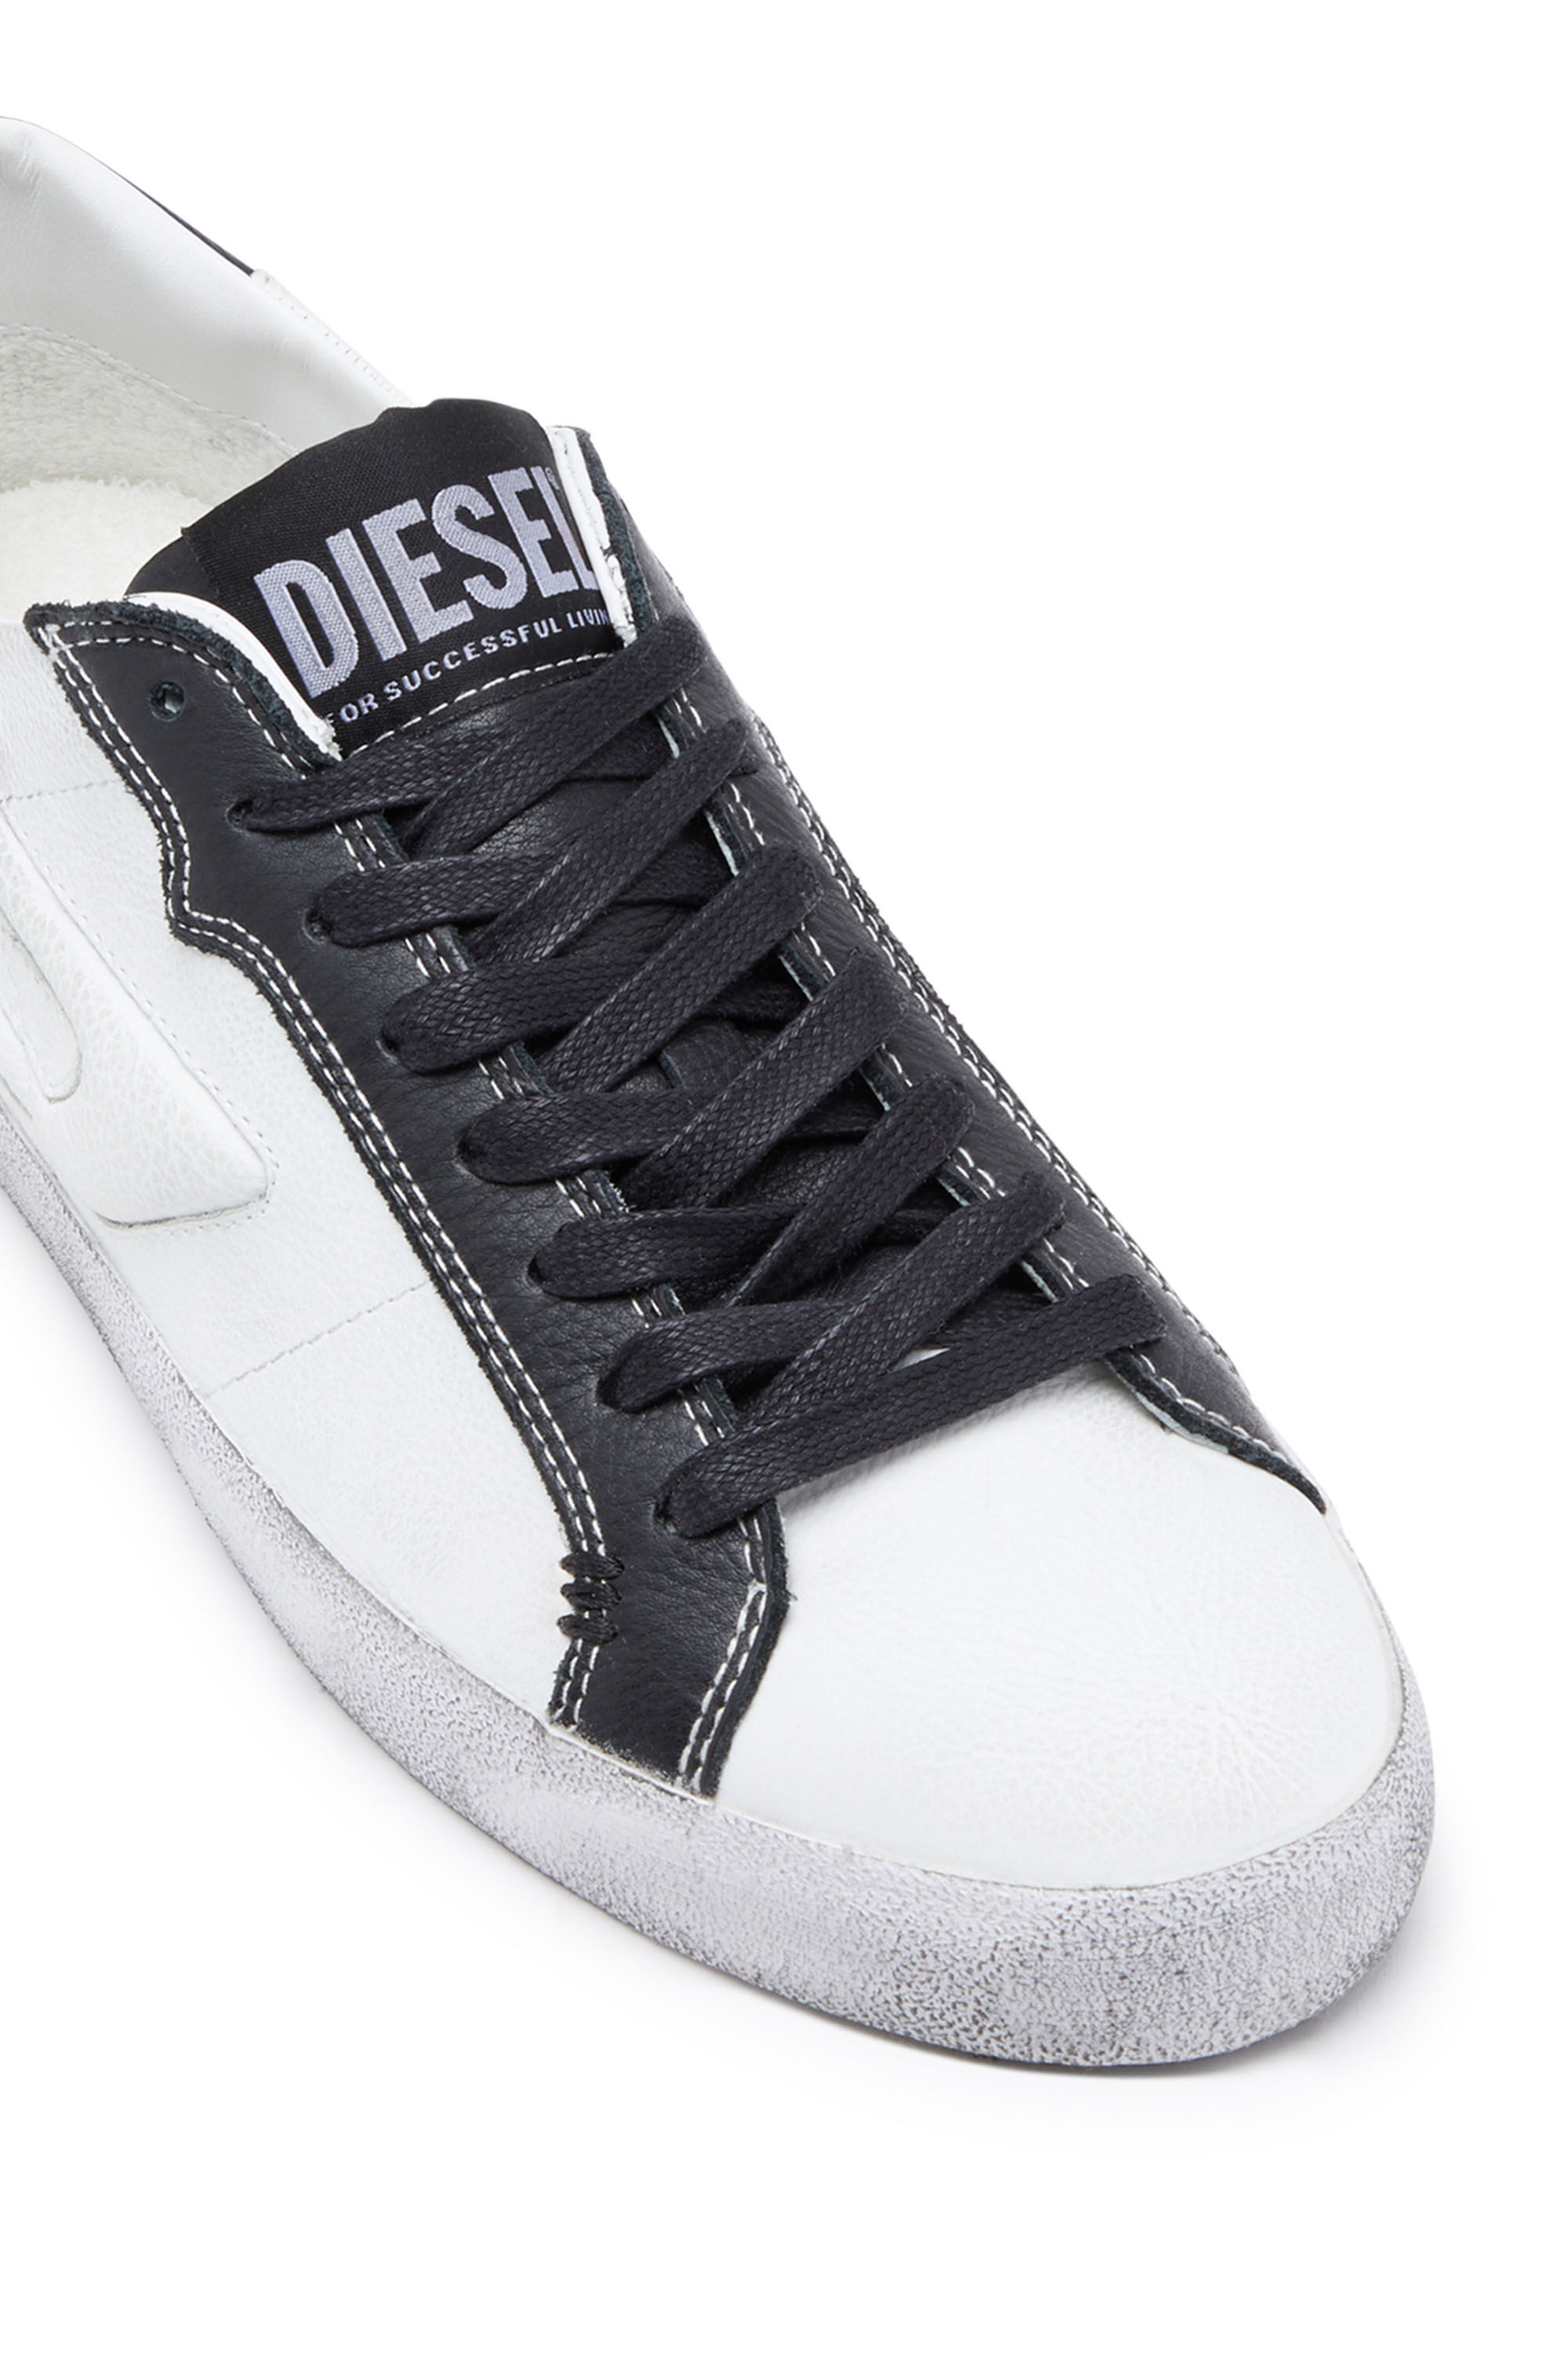 Diesel - S-LEROJI LOW X, Black/White - Image 6